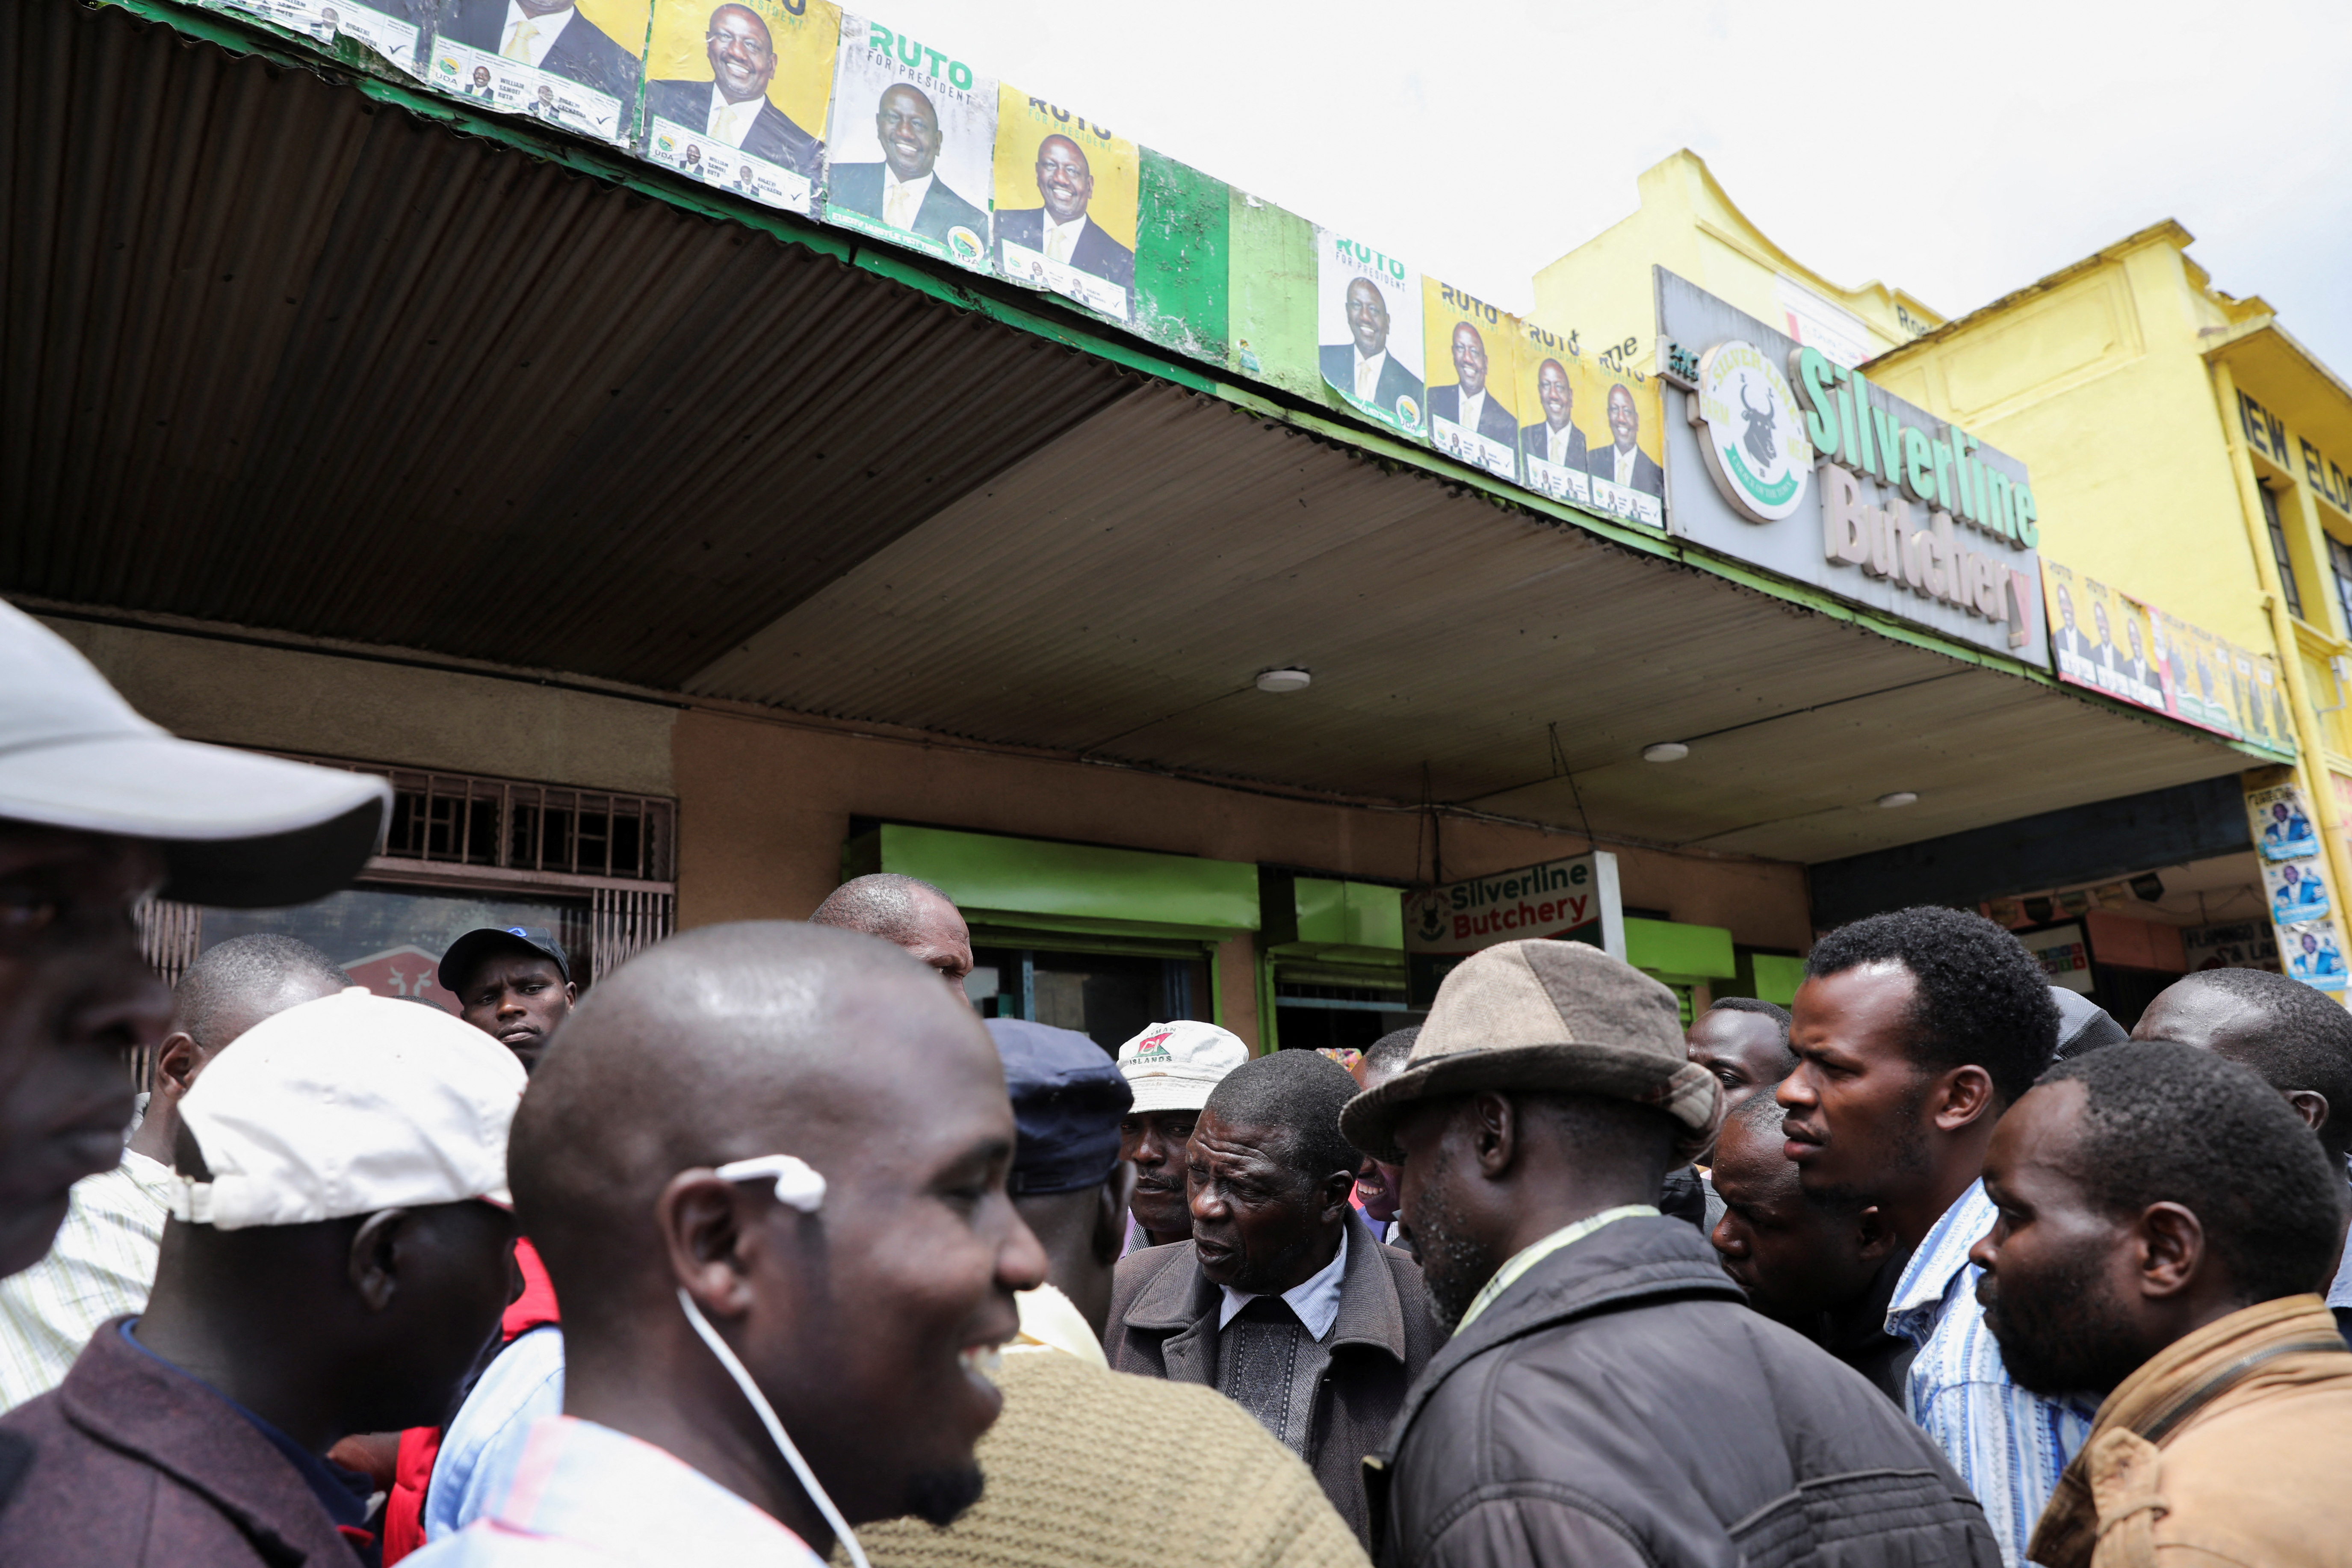 Kenyans wait for election results outside the Silverline Butchery restaurant in Eldoret